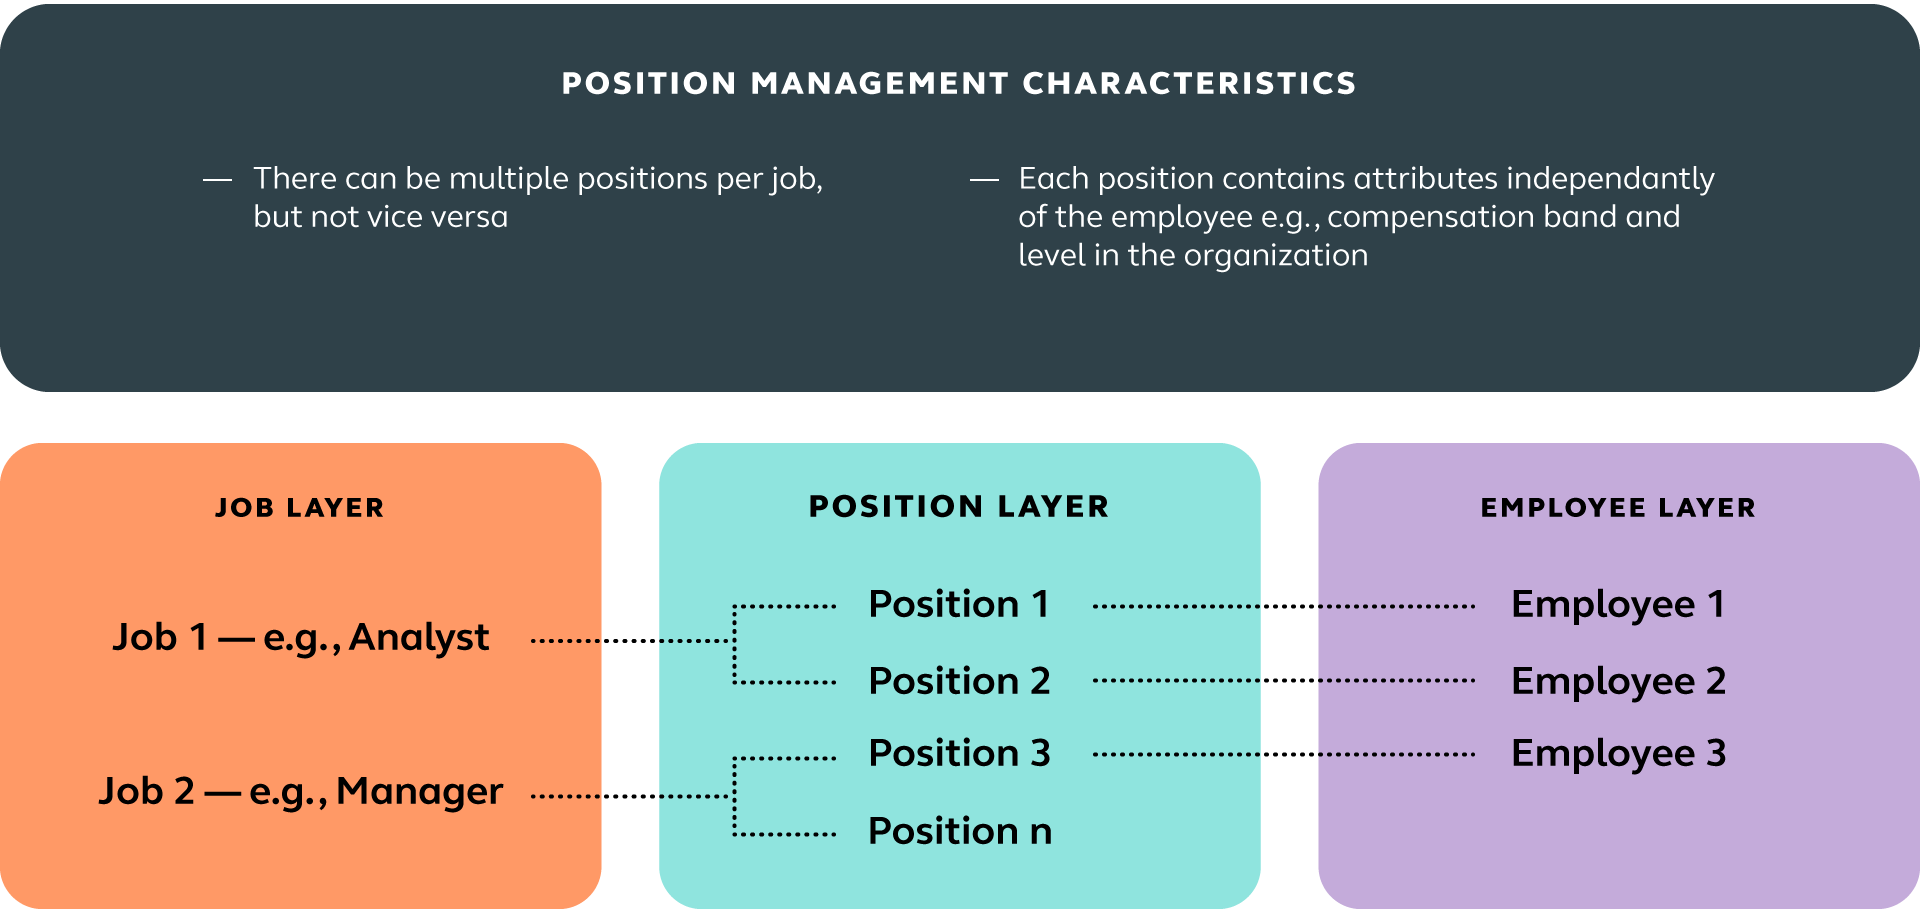 Position management characteristics